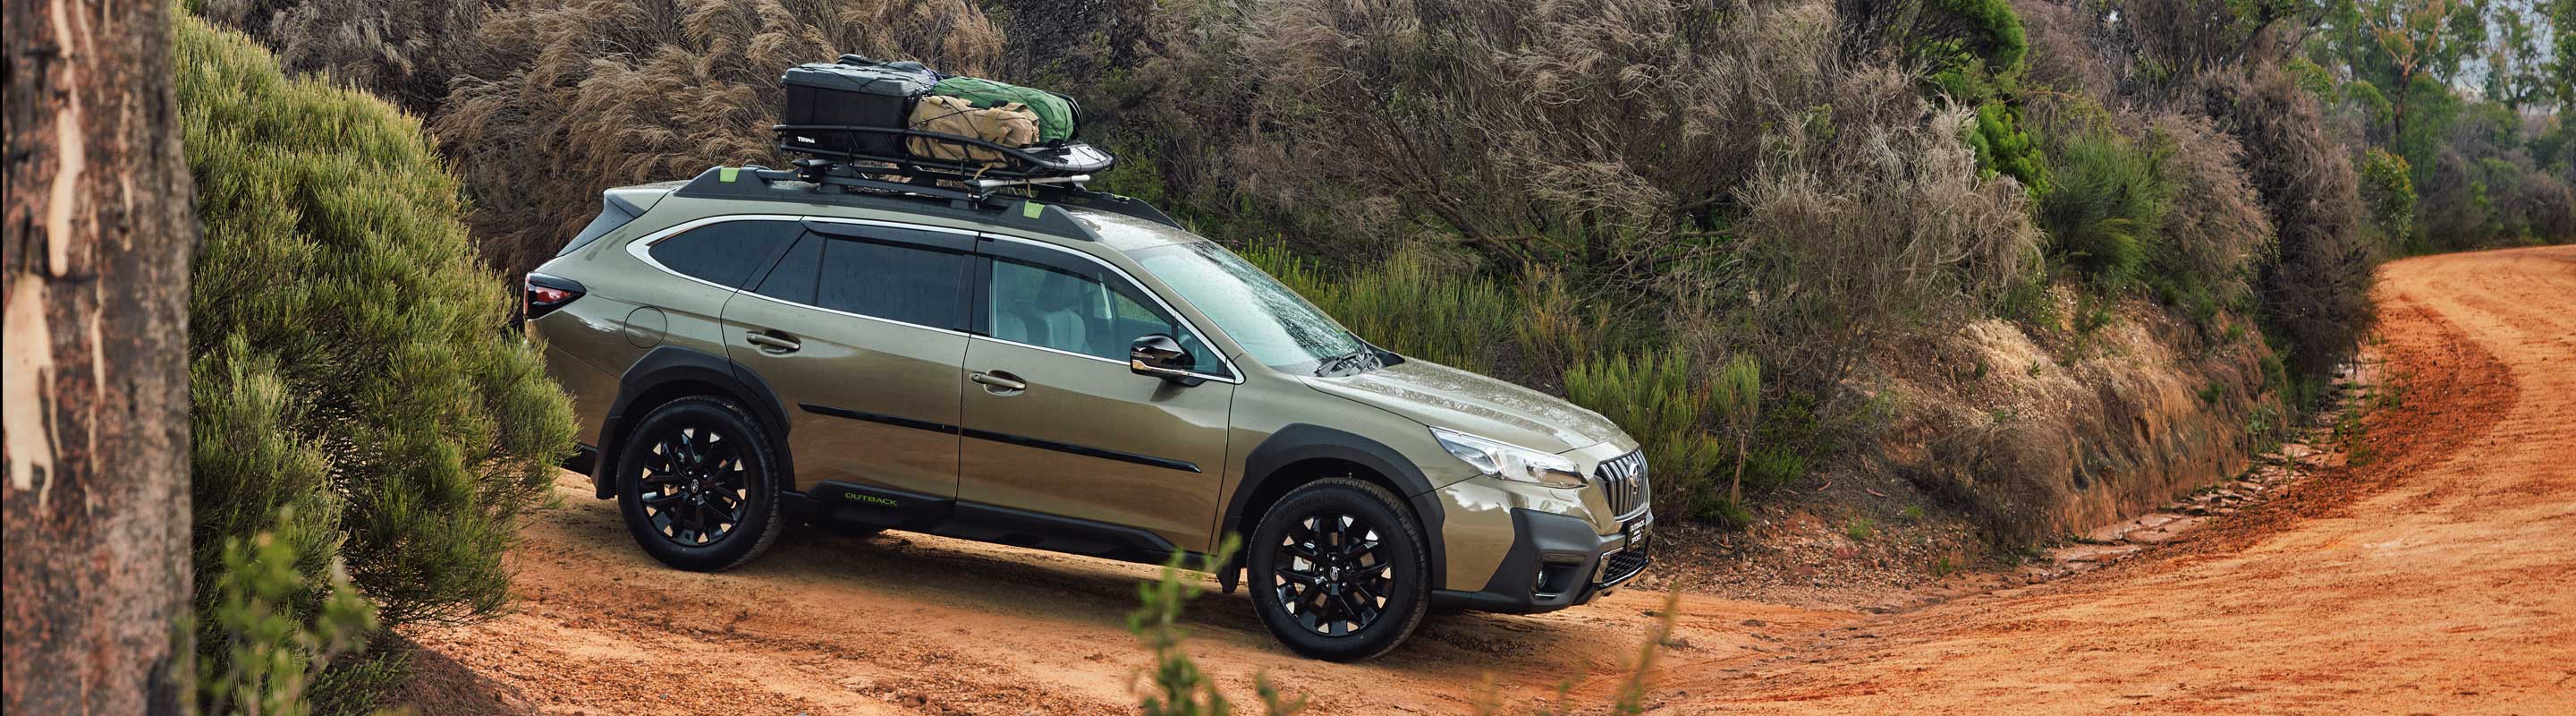 Why Drive AWD Instead of 2WD Vehicle? | Subaru Australia